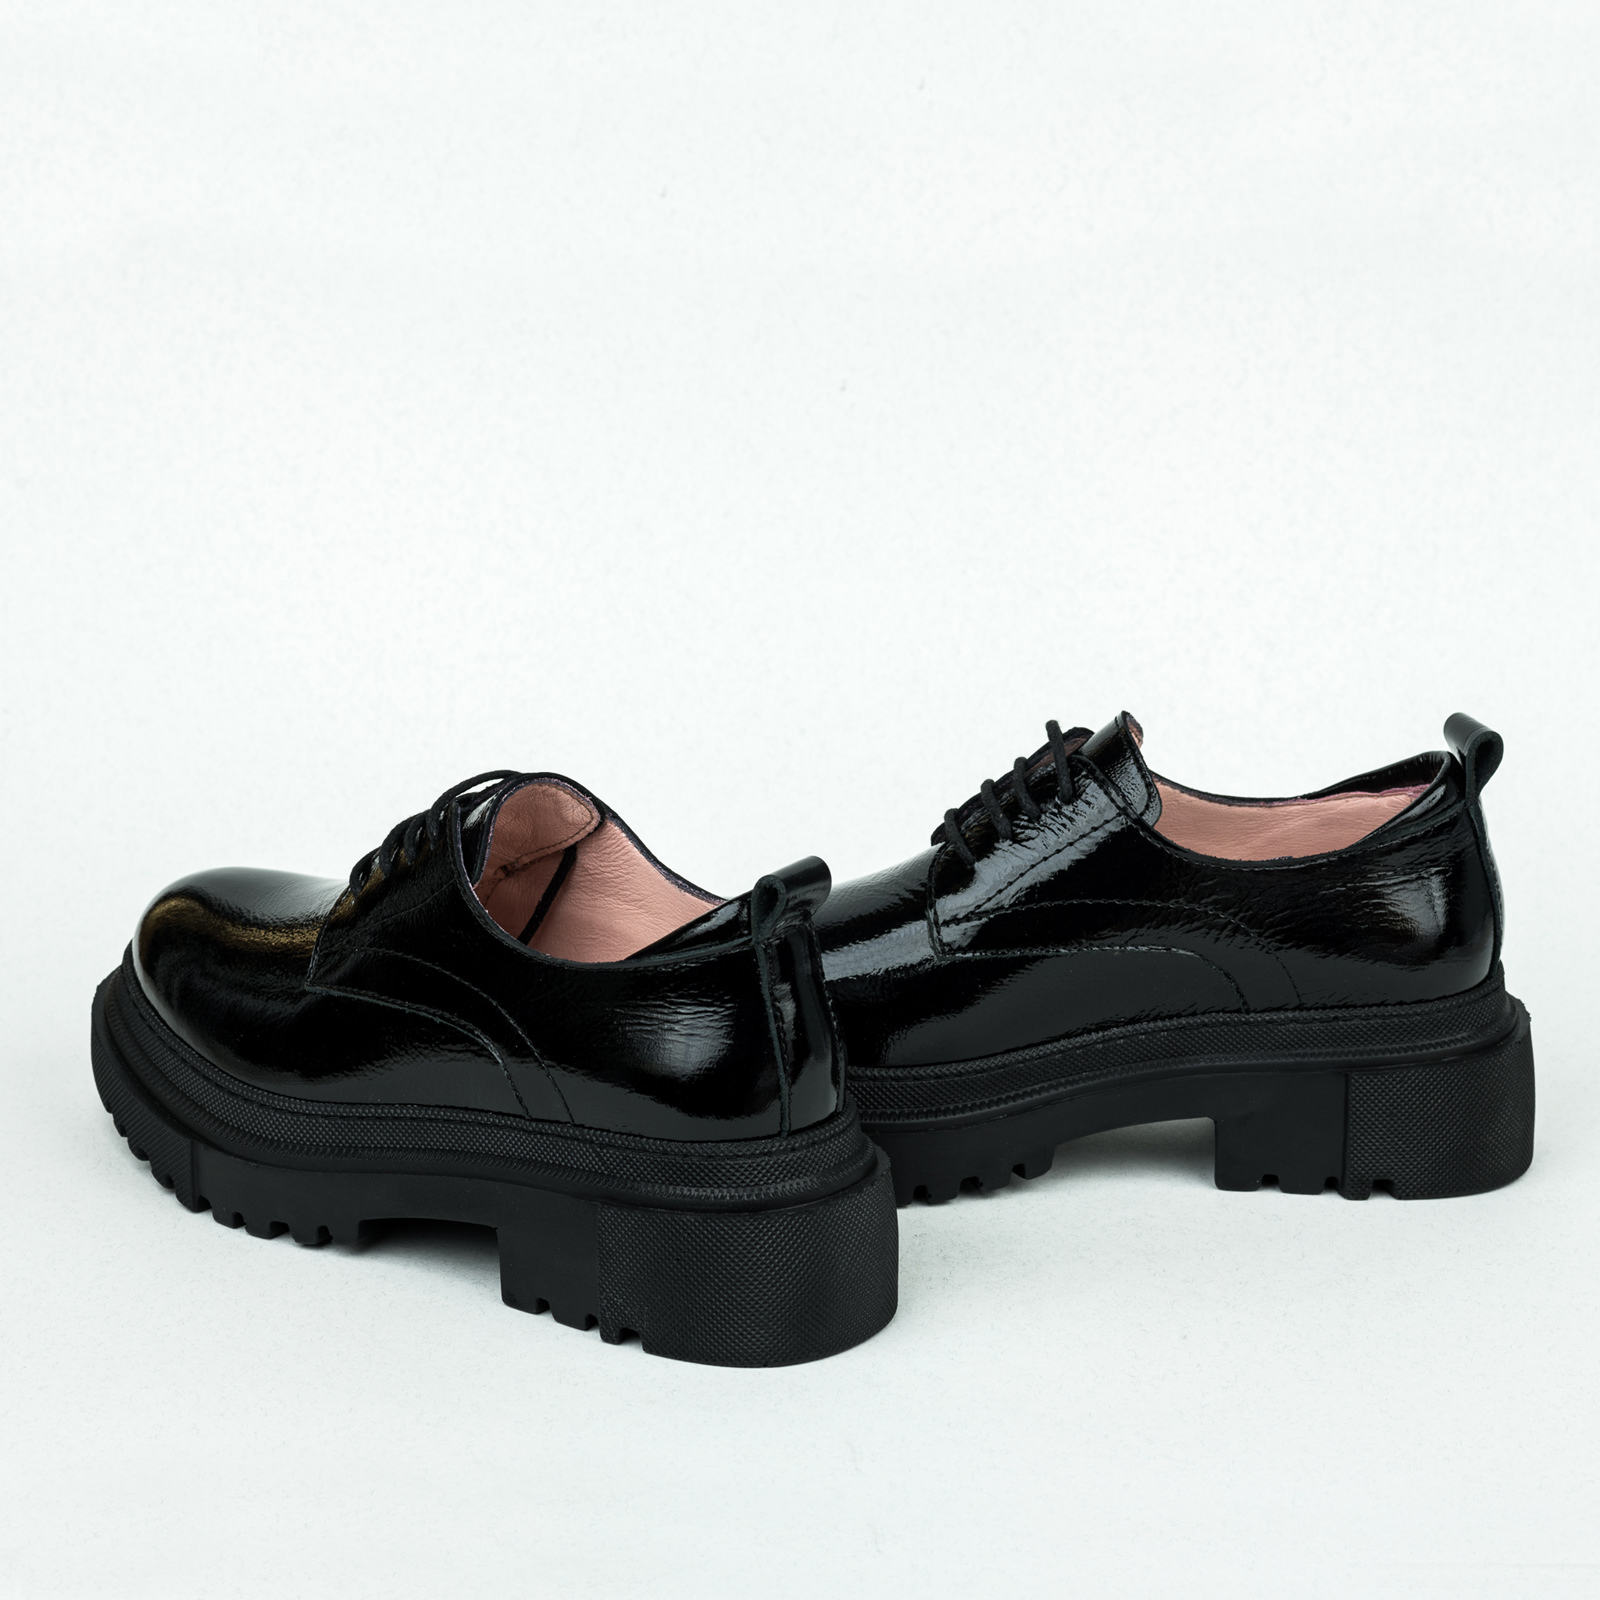 Leather shoes & flats B190 - BLACK